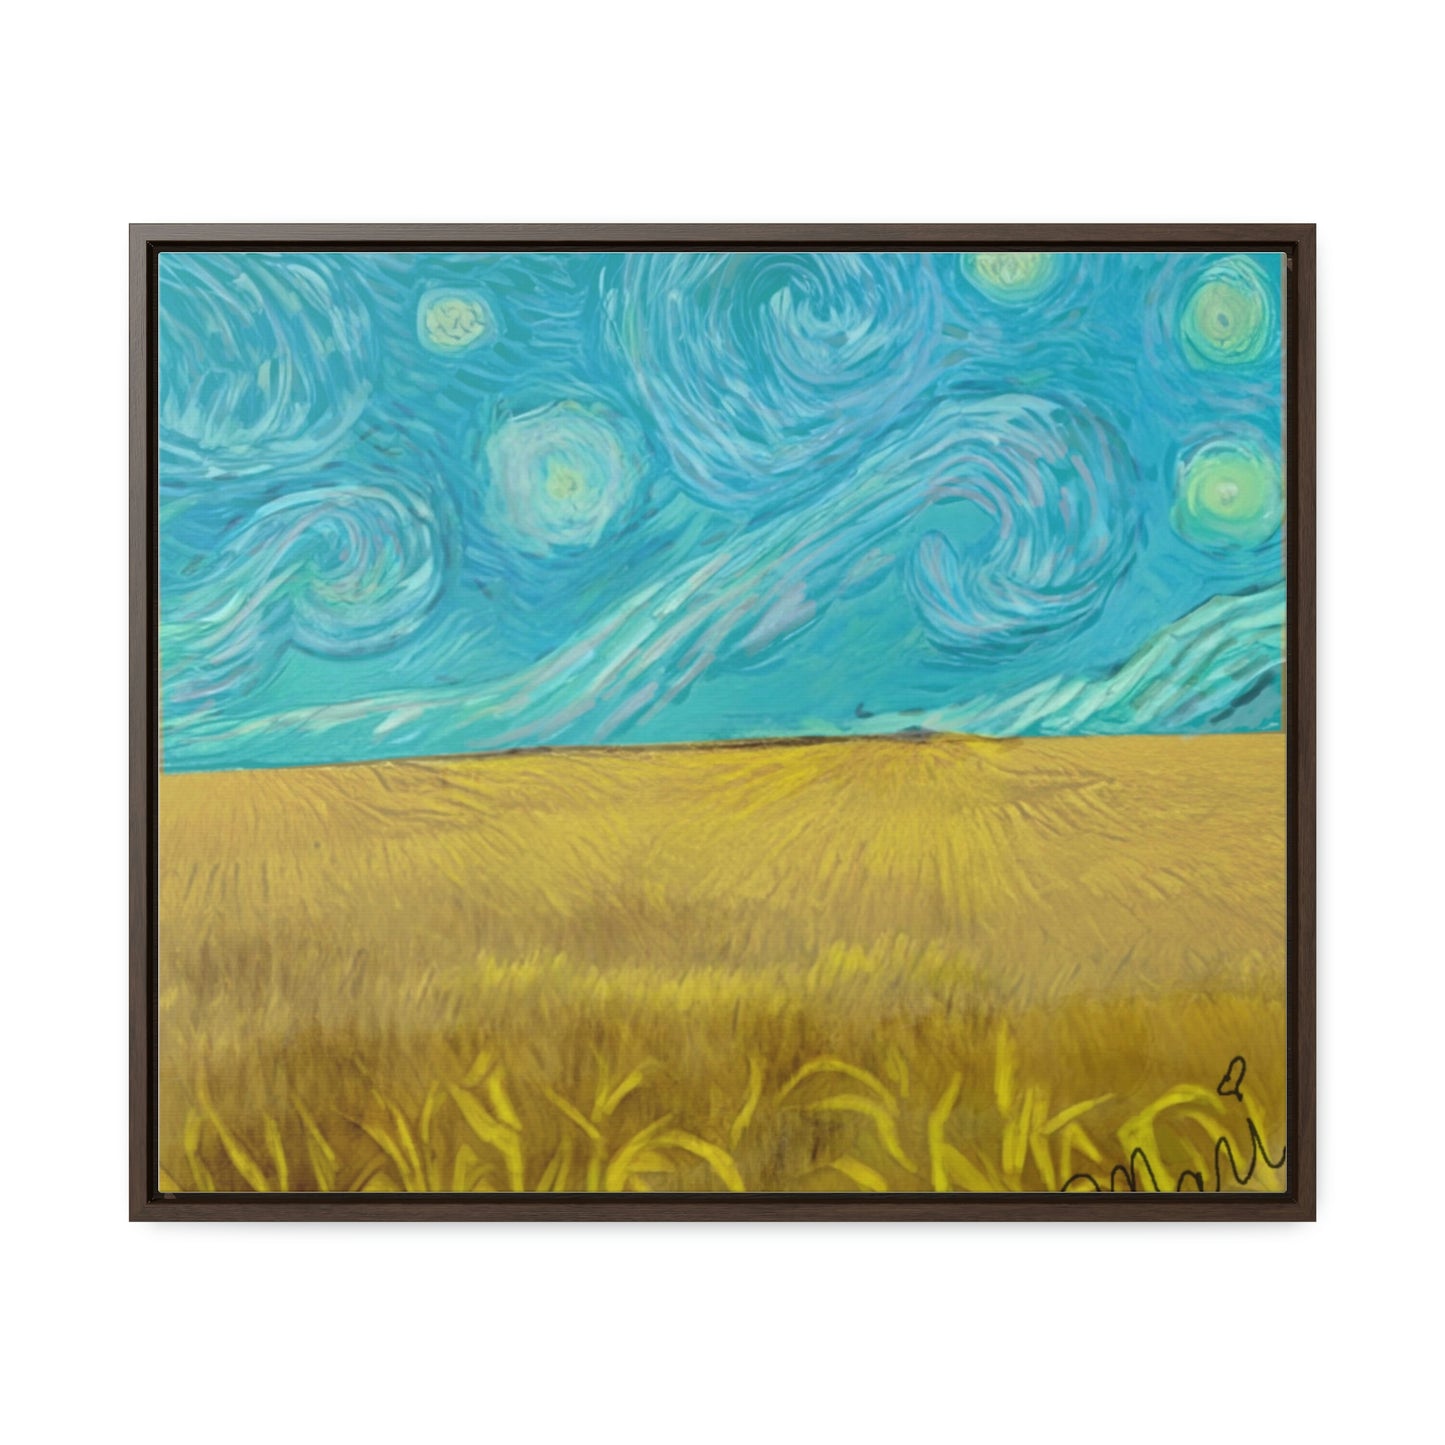 Vincents Nature, Wheat Fields